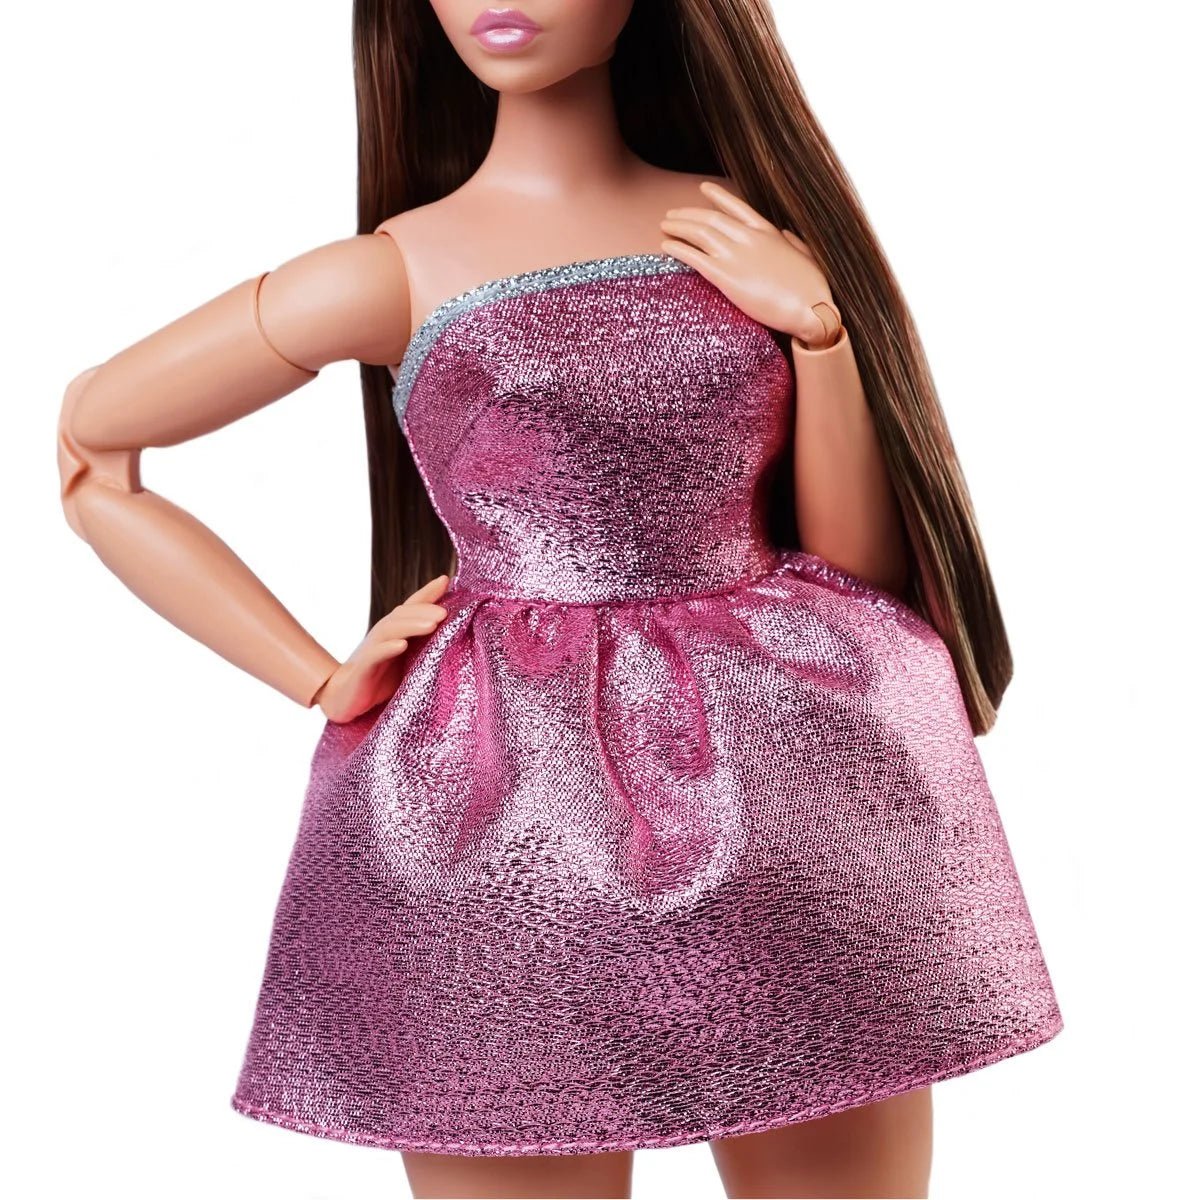 Barbie Signature Barbie Looks Doll #24 (Curvy, Long Brown Hair) - Simon's Collectibles